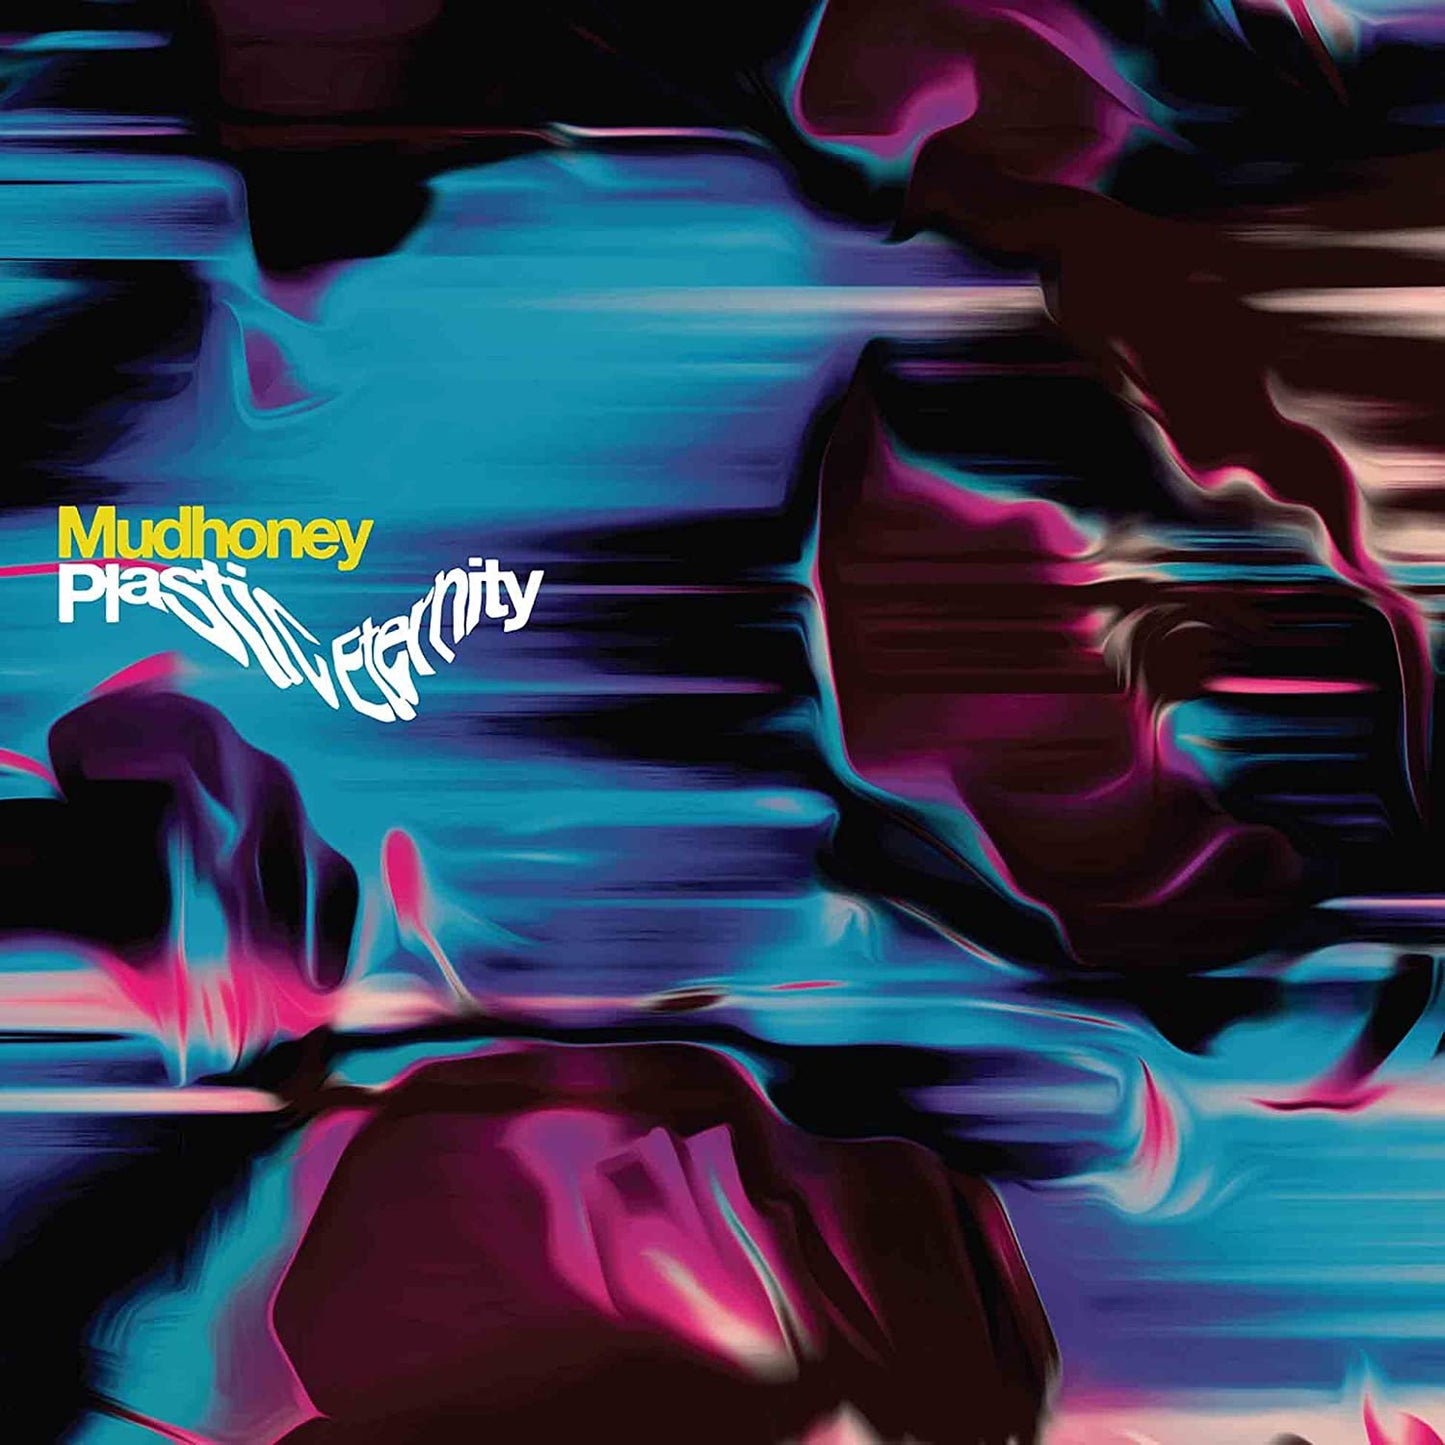 Mudhoney Plastic Eternity